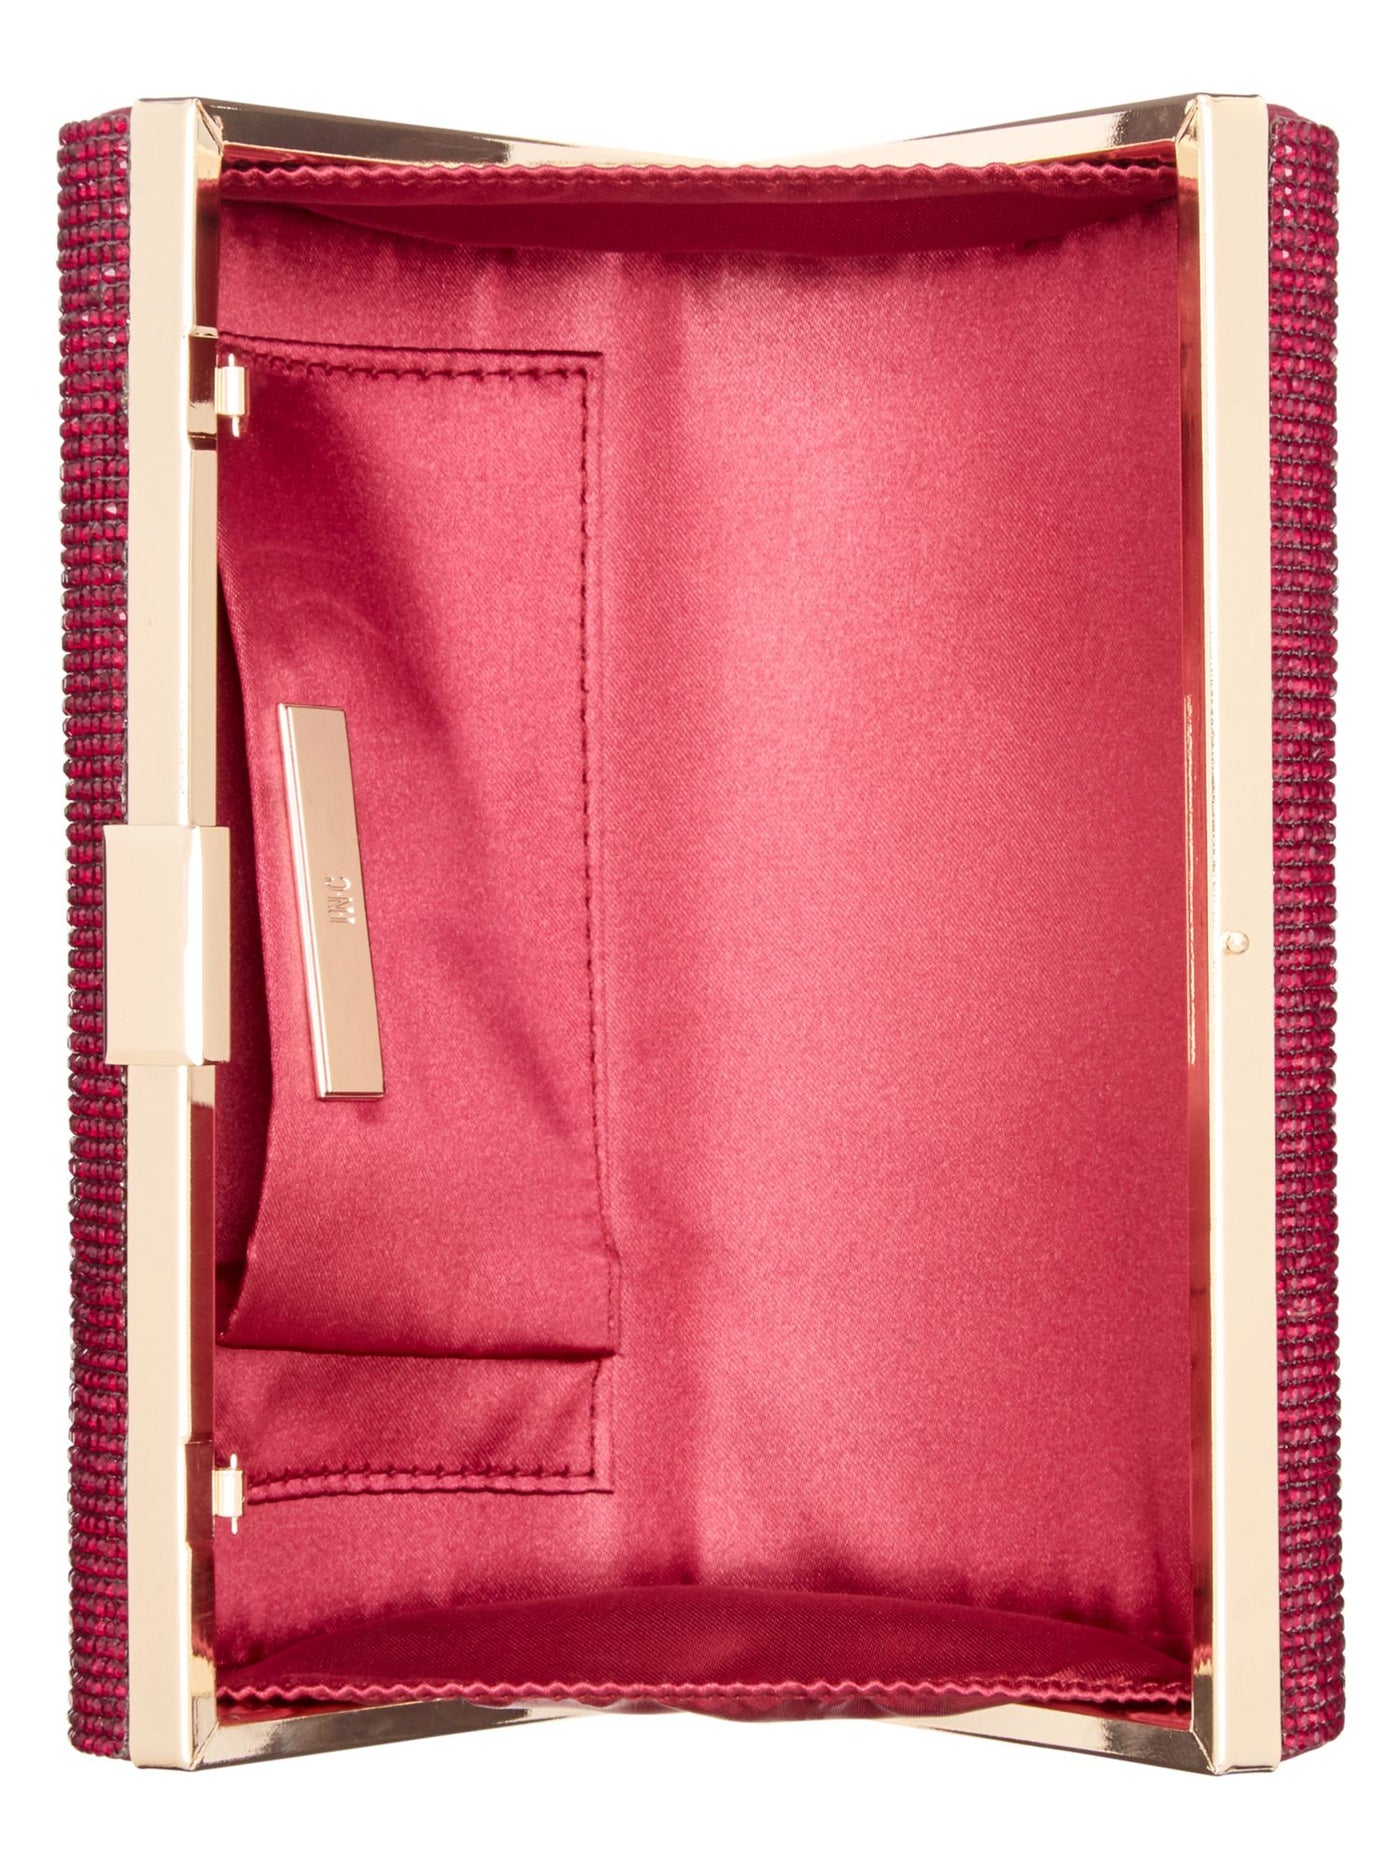 INC Women's Pink Rhinestone Suede Chain Strap Clutch Handbag Purse